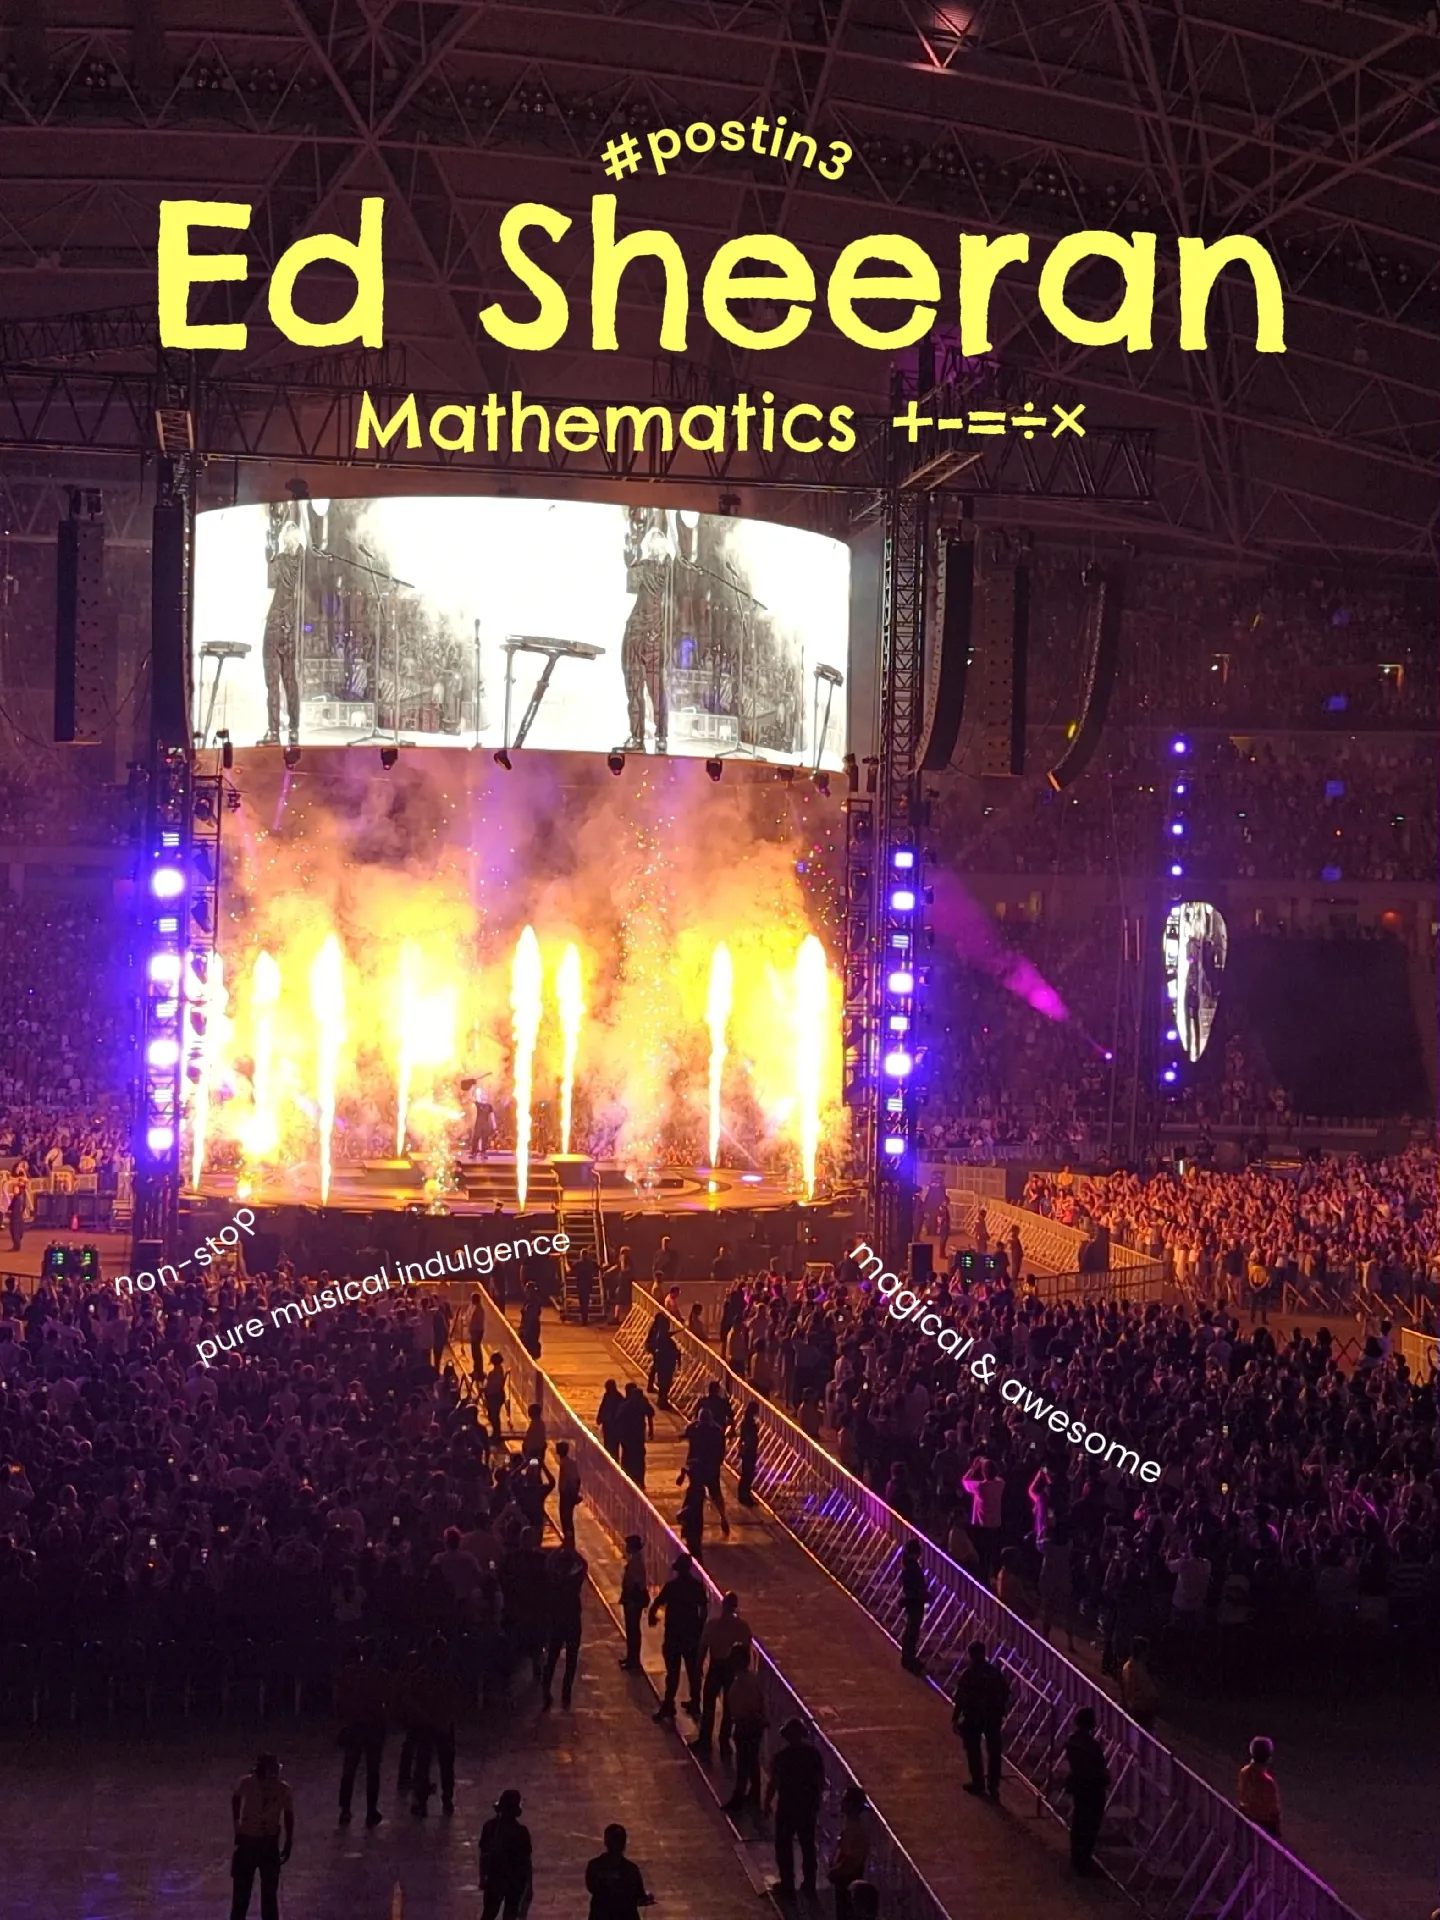 Ed Sheeran +-=÷× Tour in Singapore 16 Feb 24's images